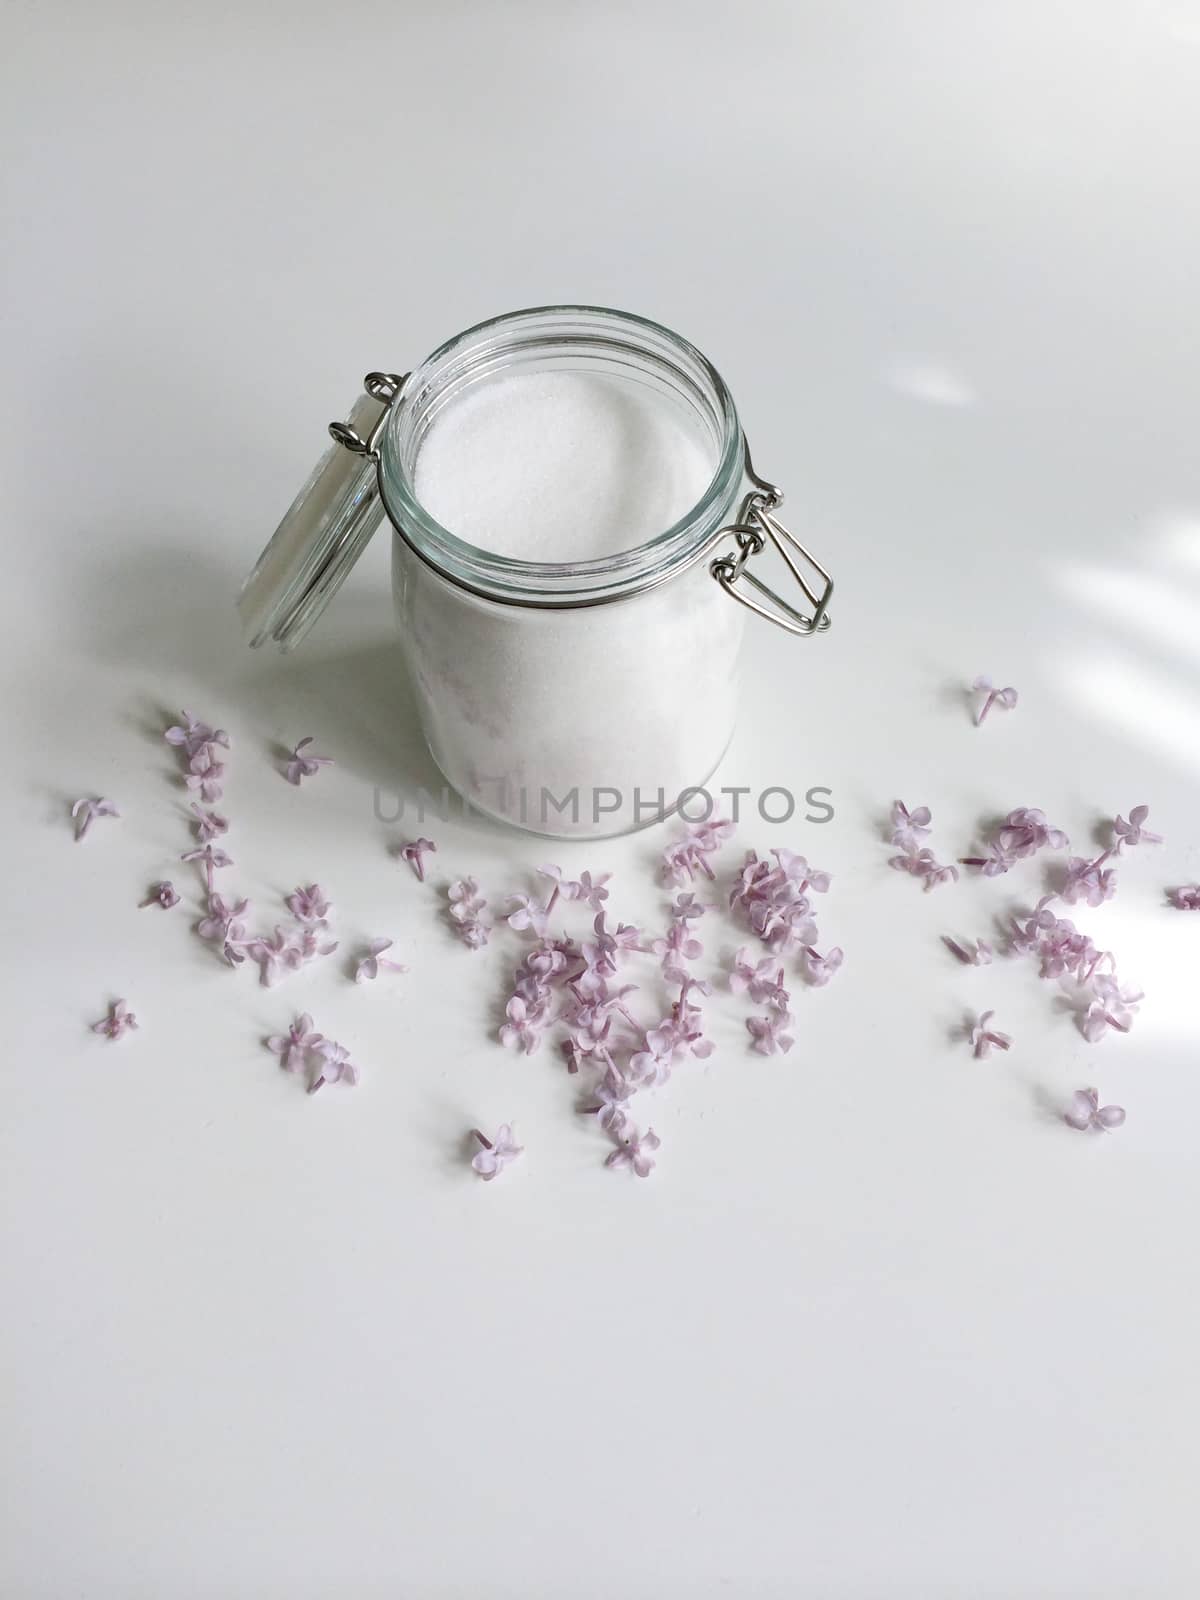 Glass jar of white sugar by mmm